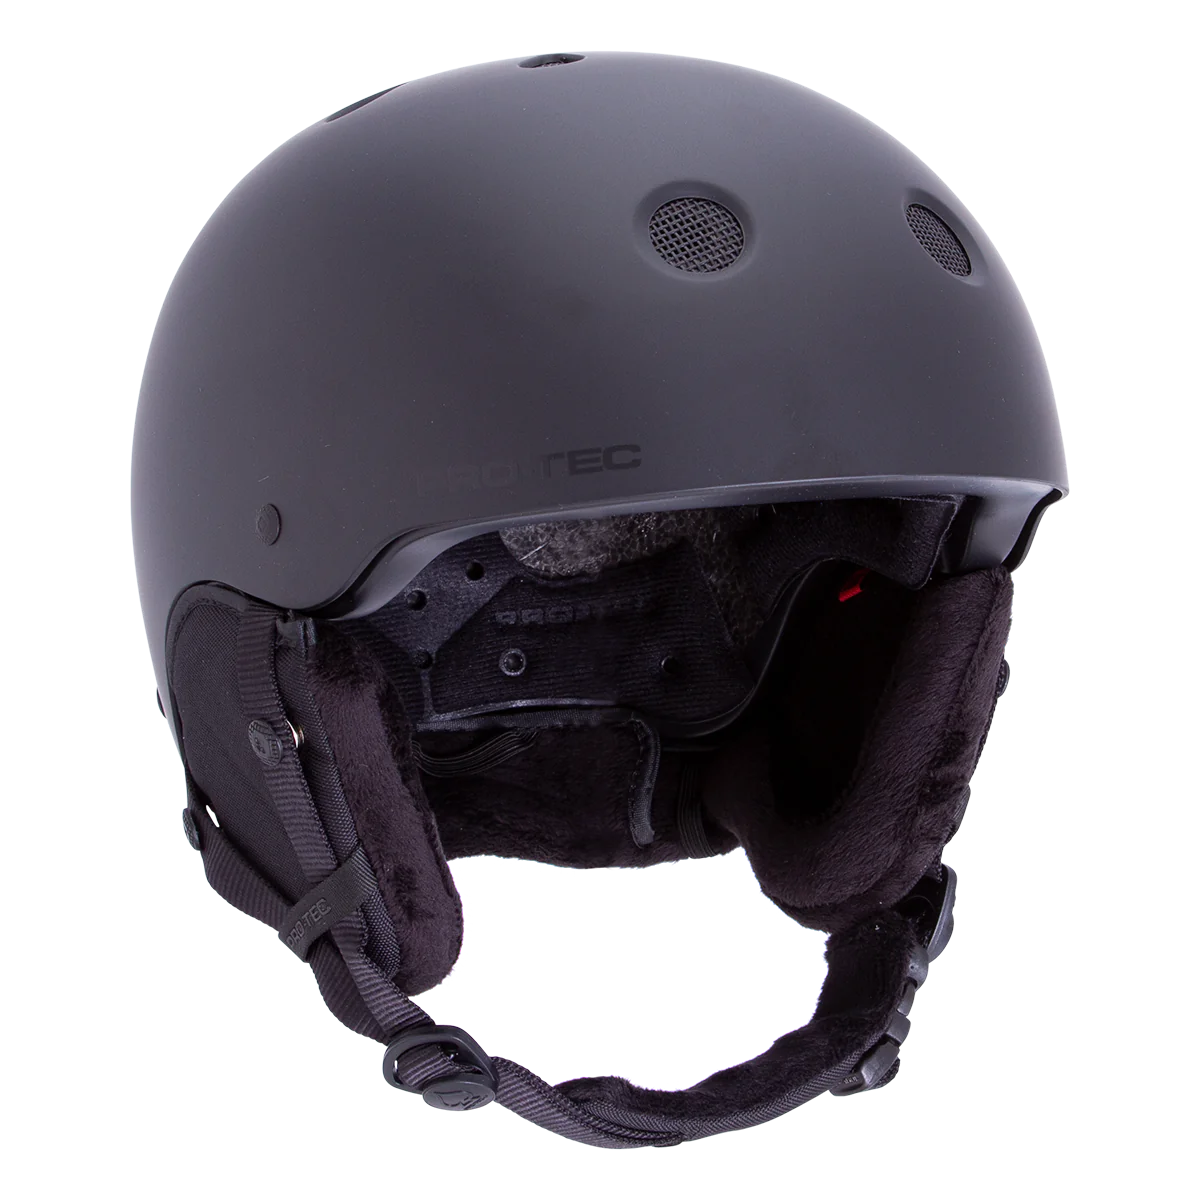 Pro-tec Classic helm stealth black